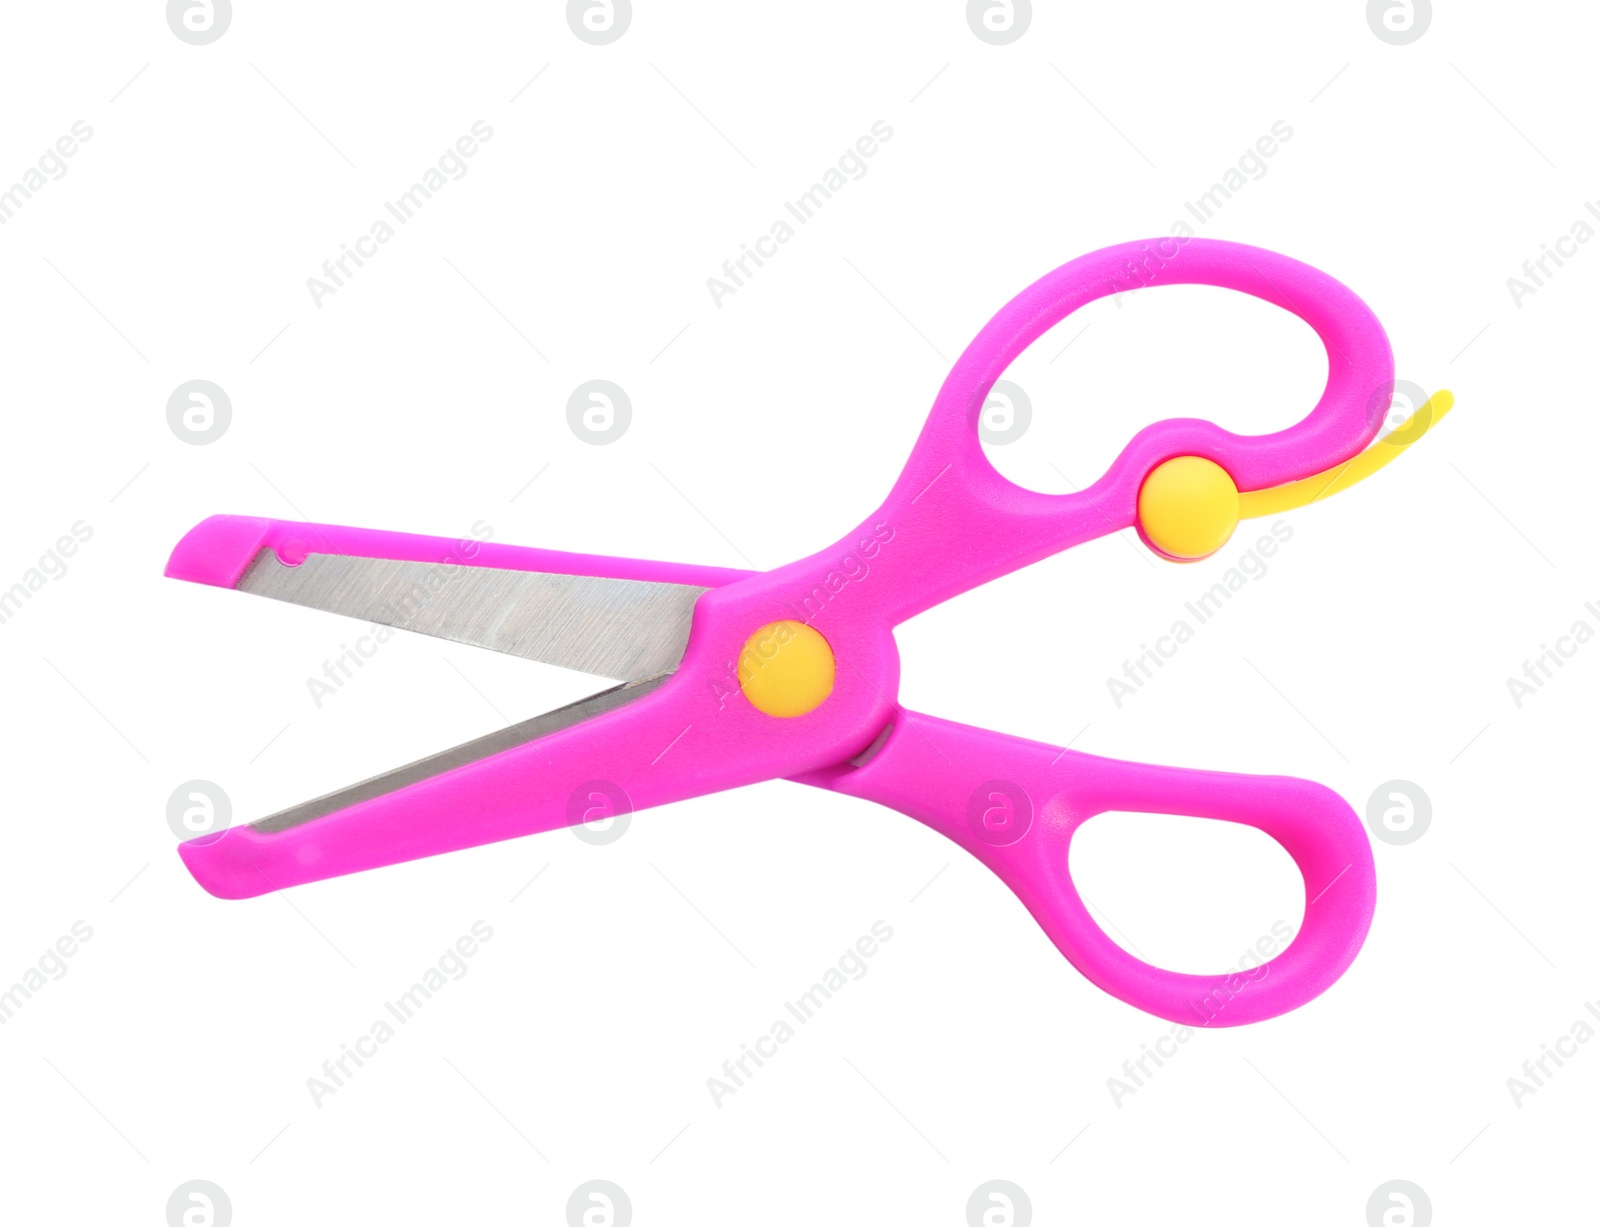 Photo of Pair of training scissors on white background